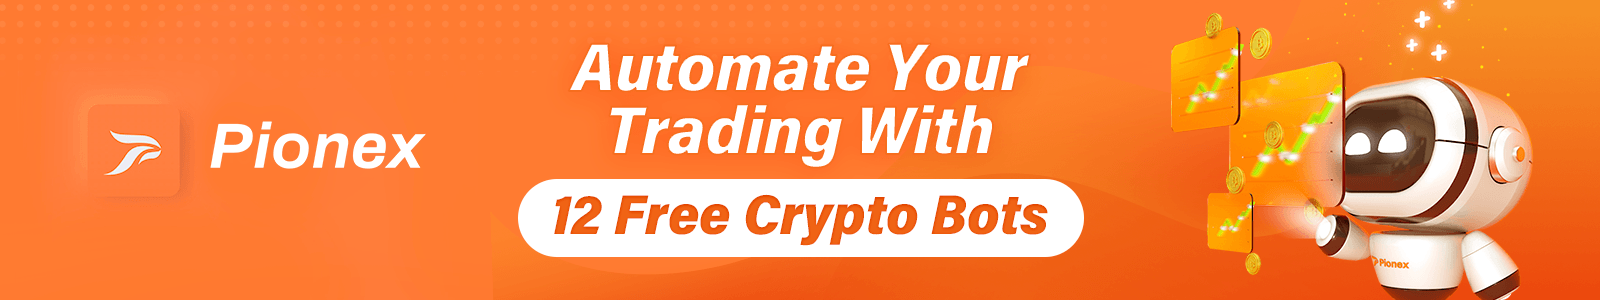 Pionex – The biggest Binance Broker that provides 12 free crypto trading bots